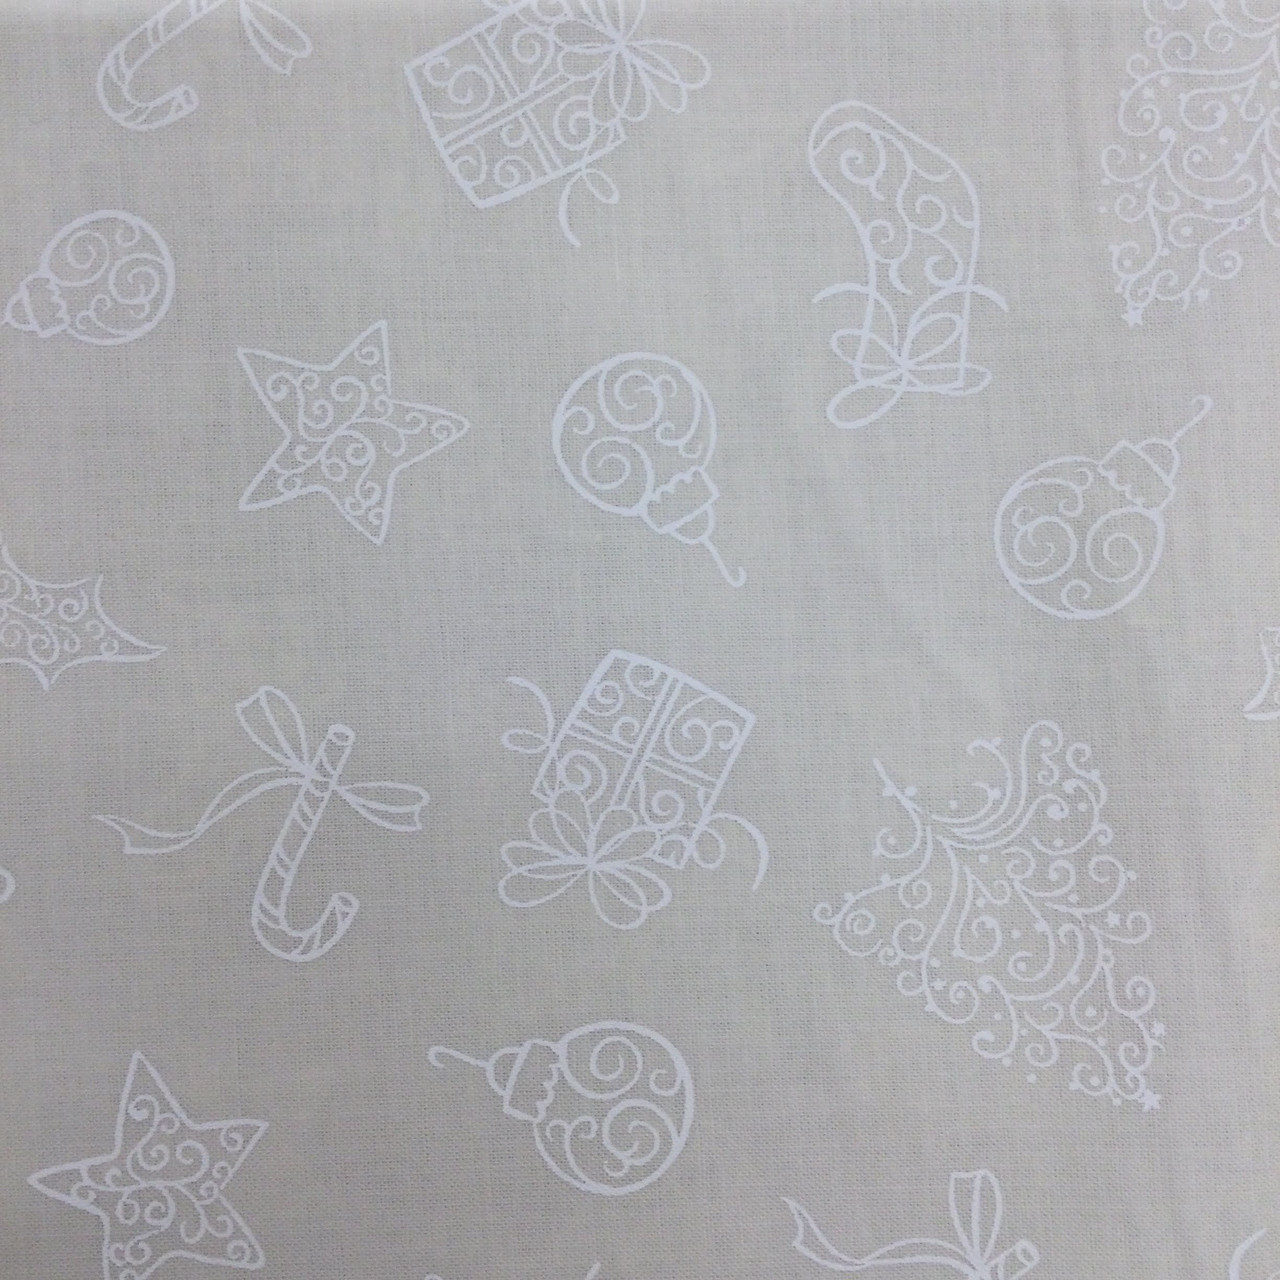 Black Suede Print by P&B Textiles 100% Cotton Fabric